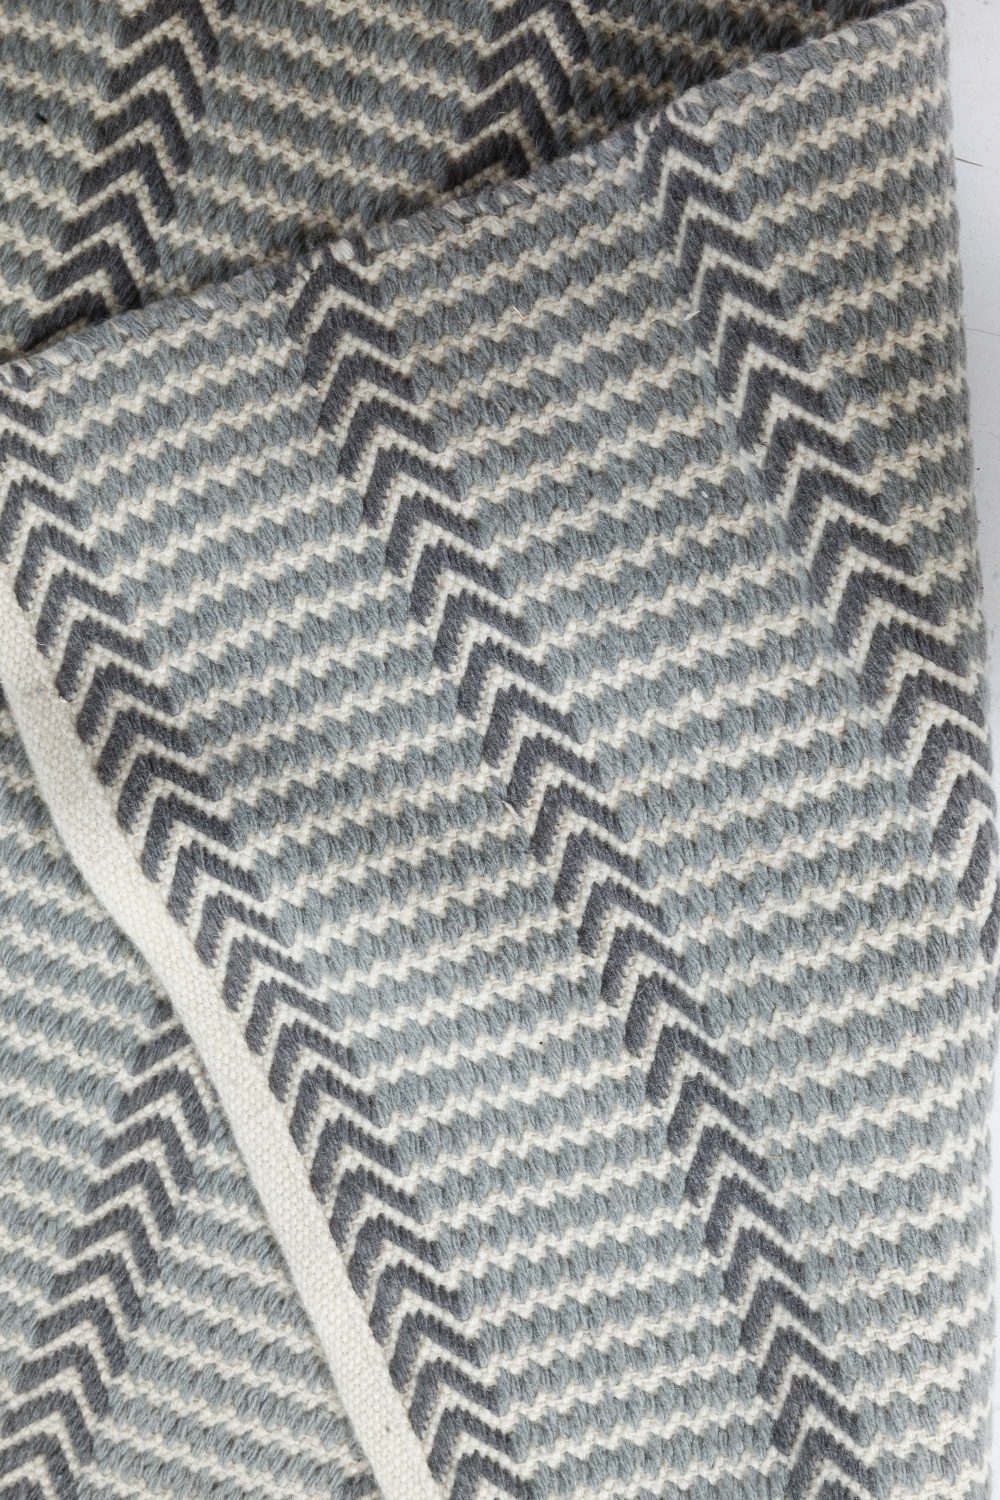 Doris Leslie Blau Collection Buxus Wool Rug in Steel-Blue, Gray and Ivory N10784